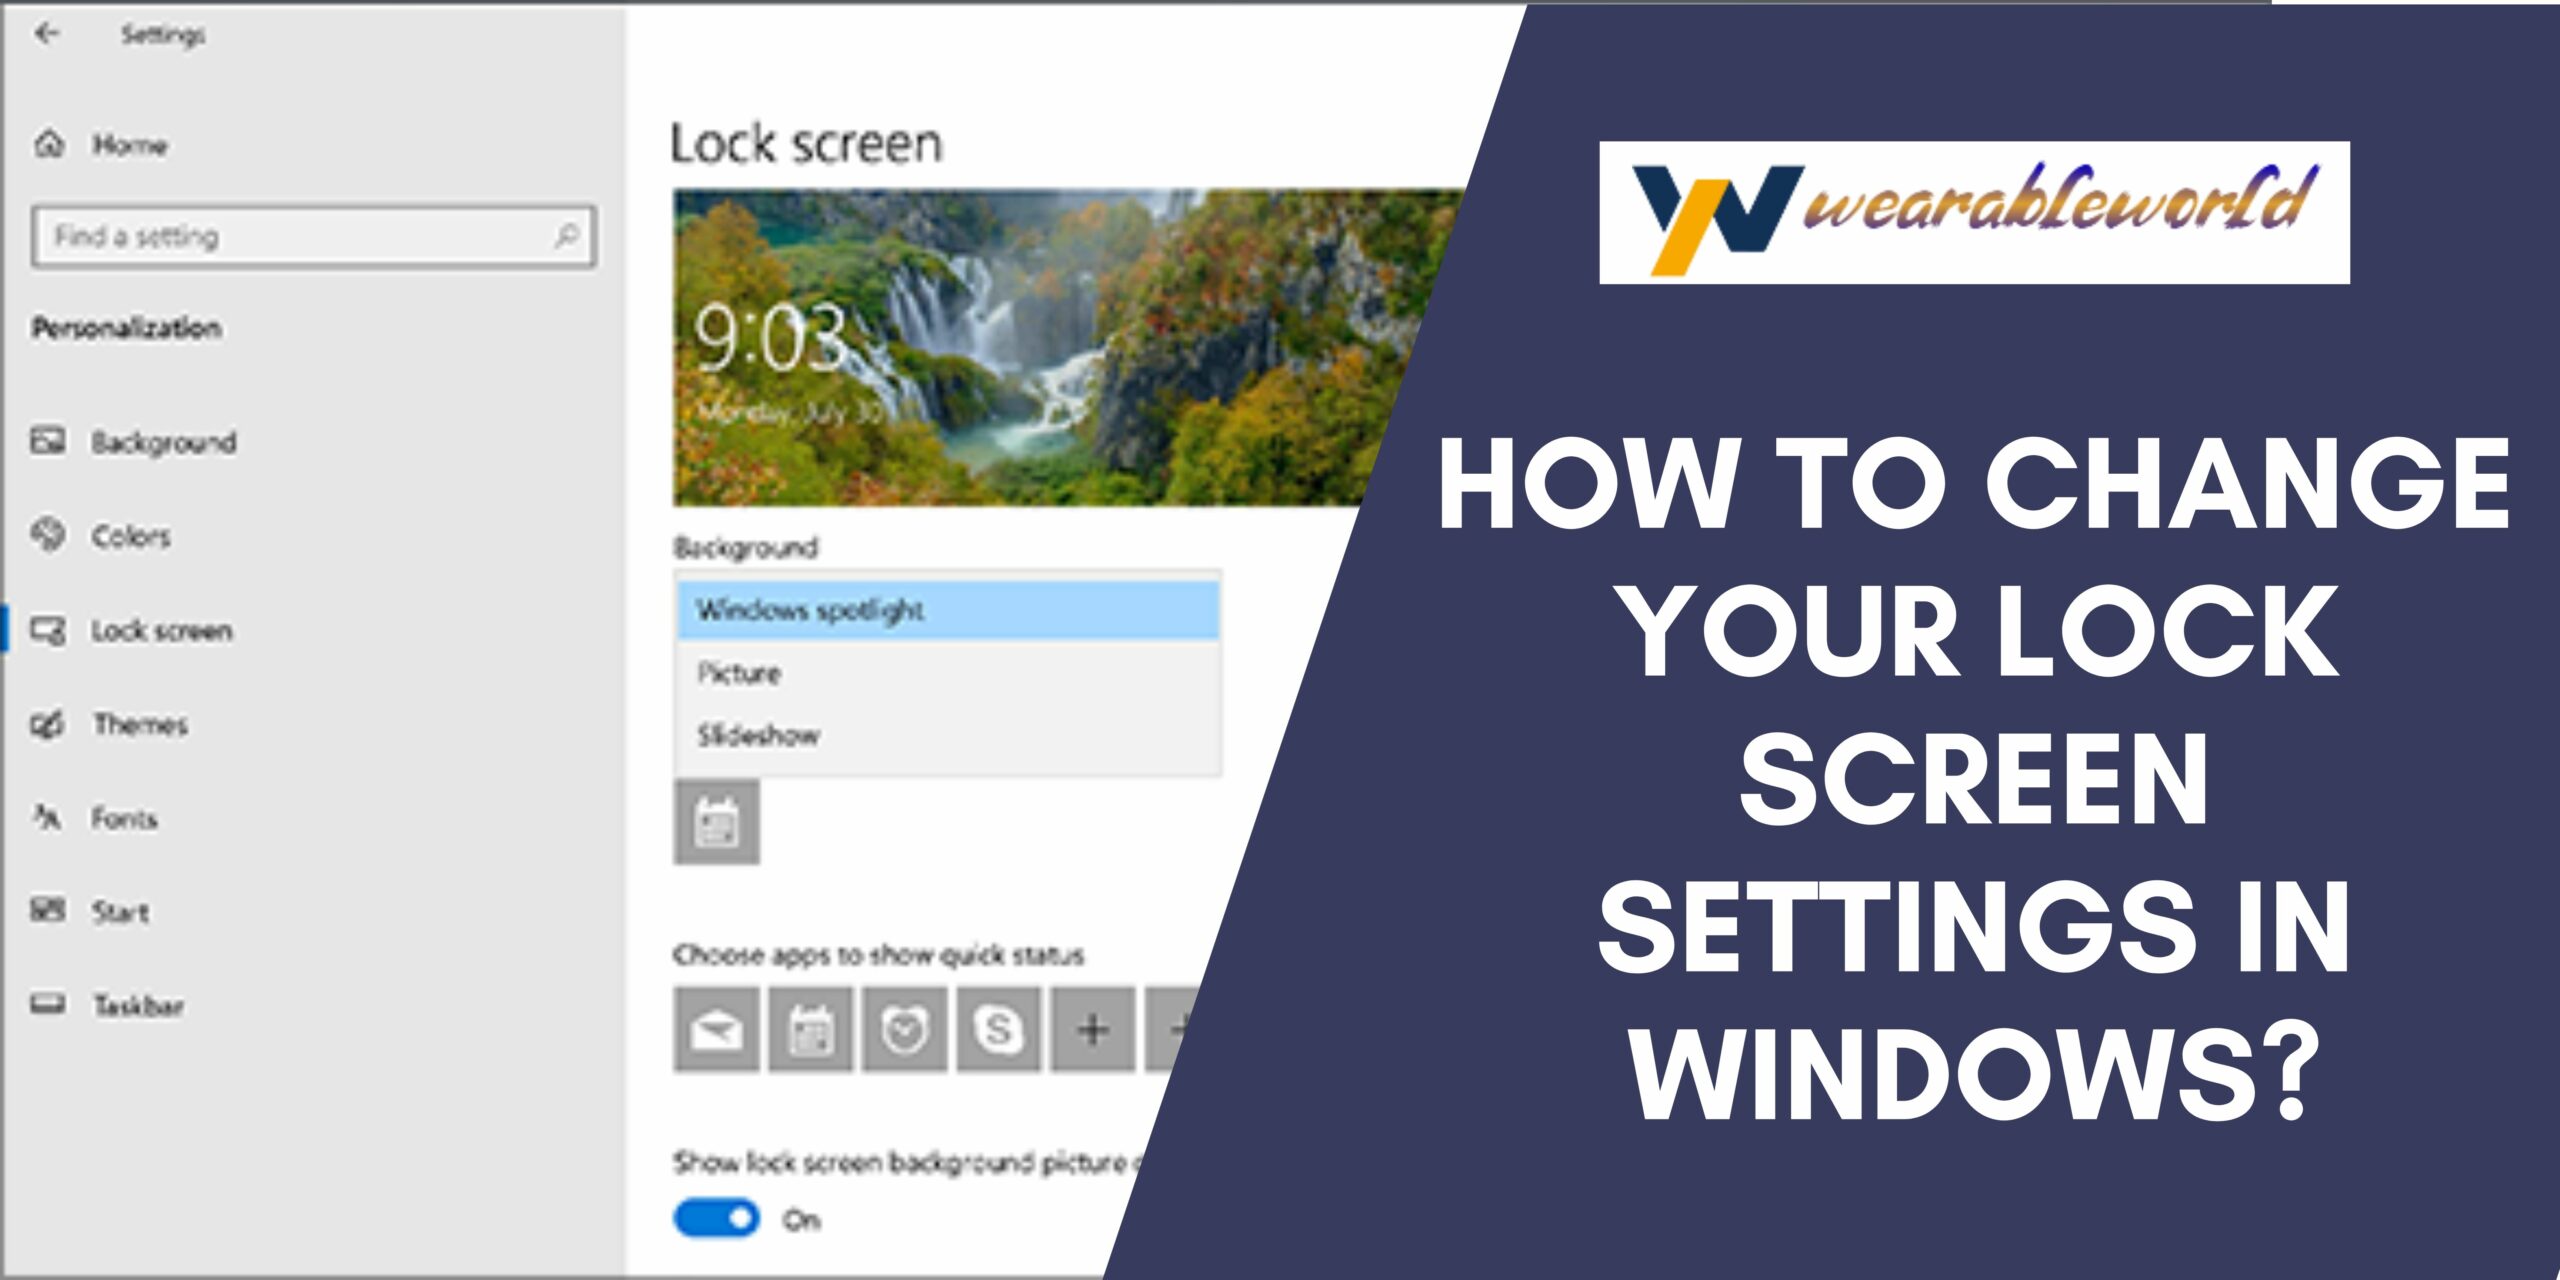 Change your lock screen settings in Windows